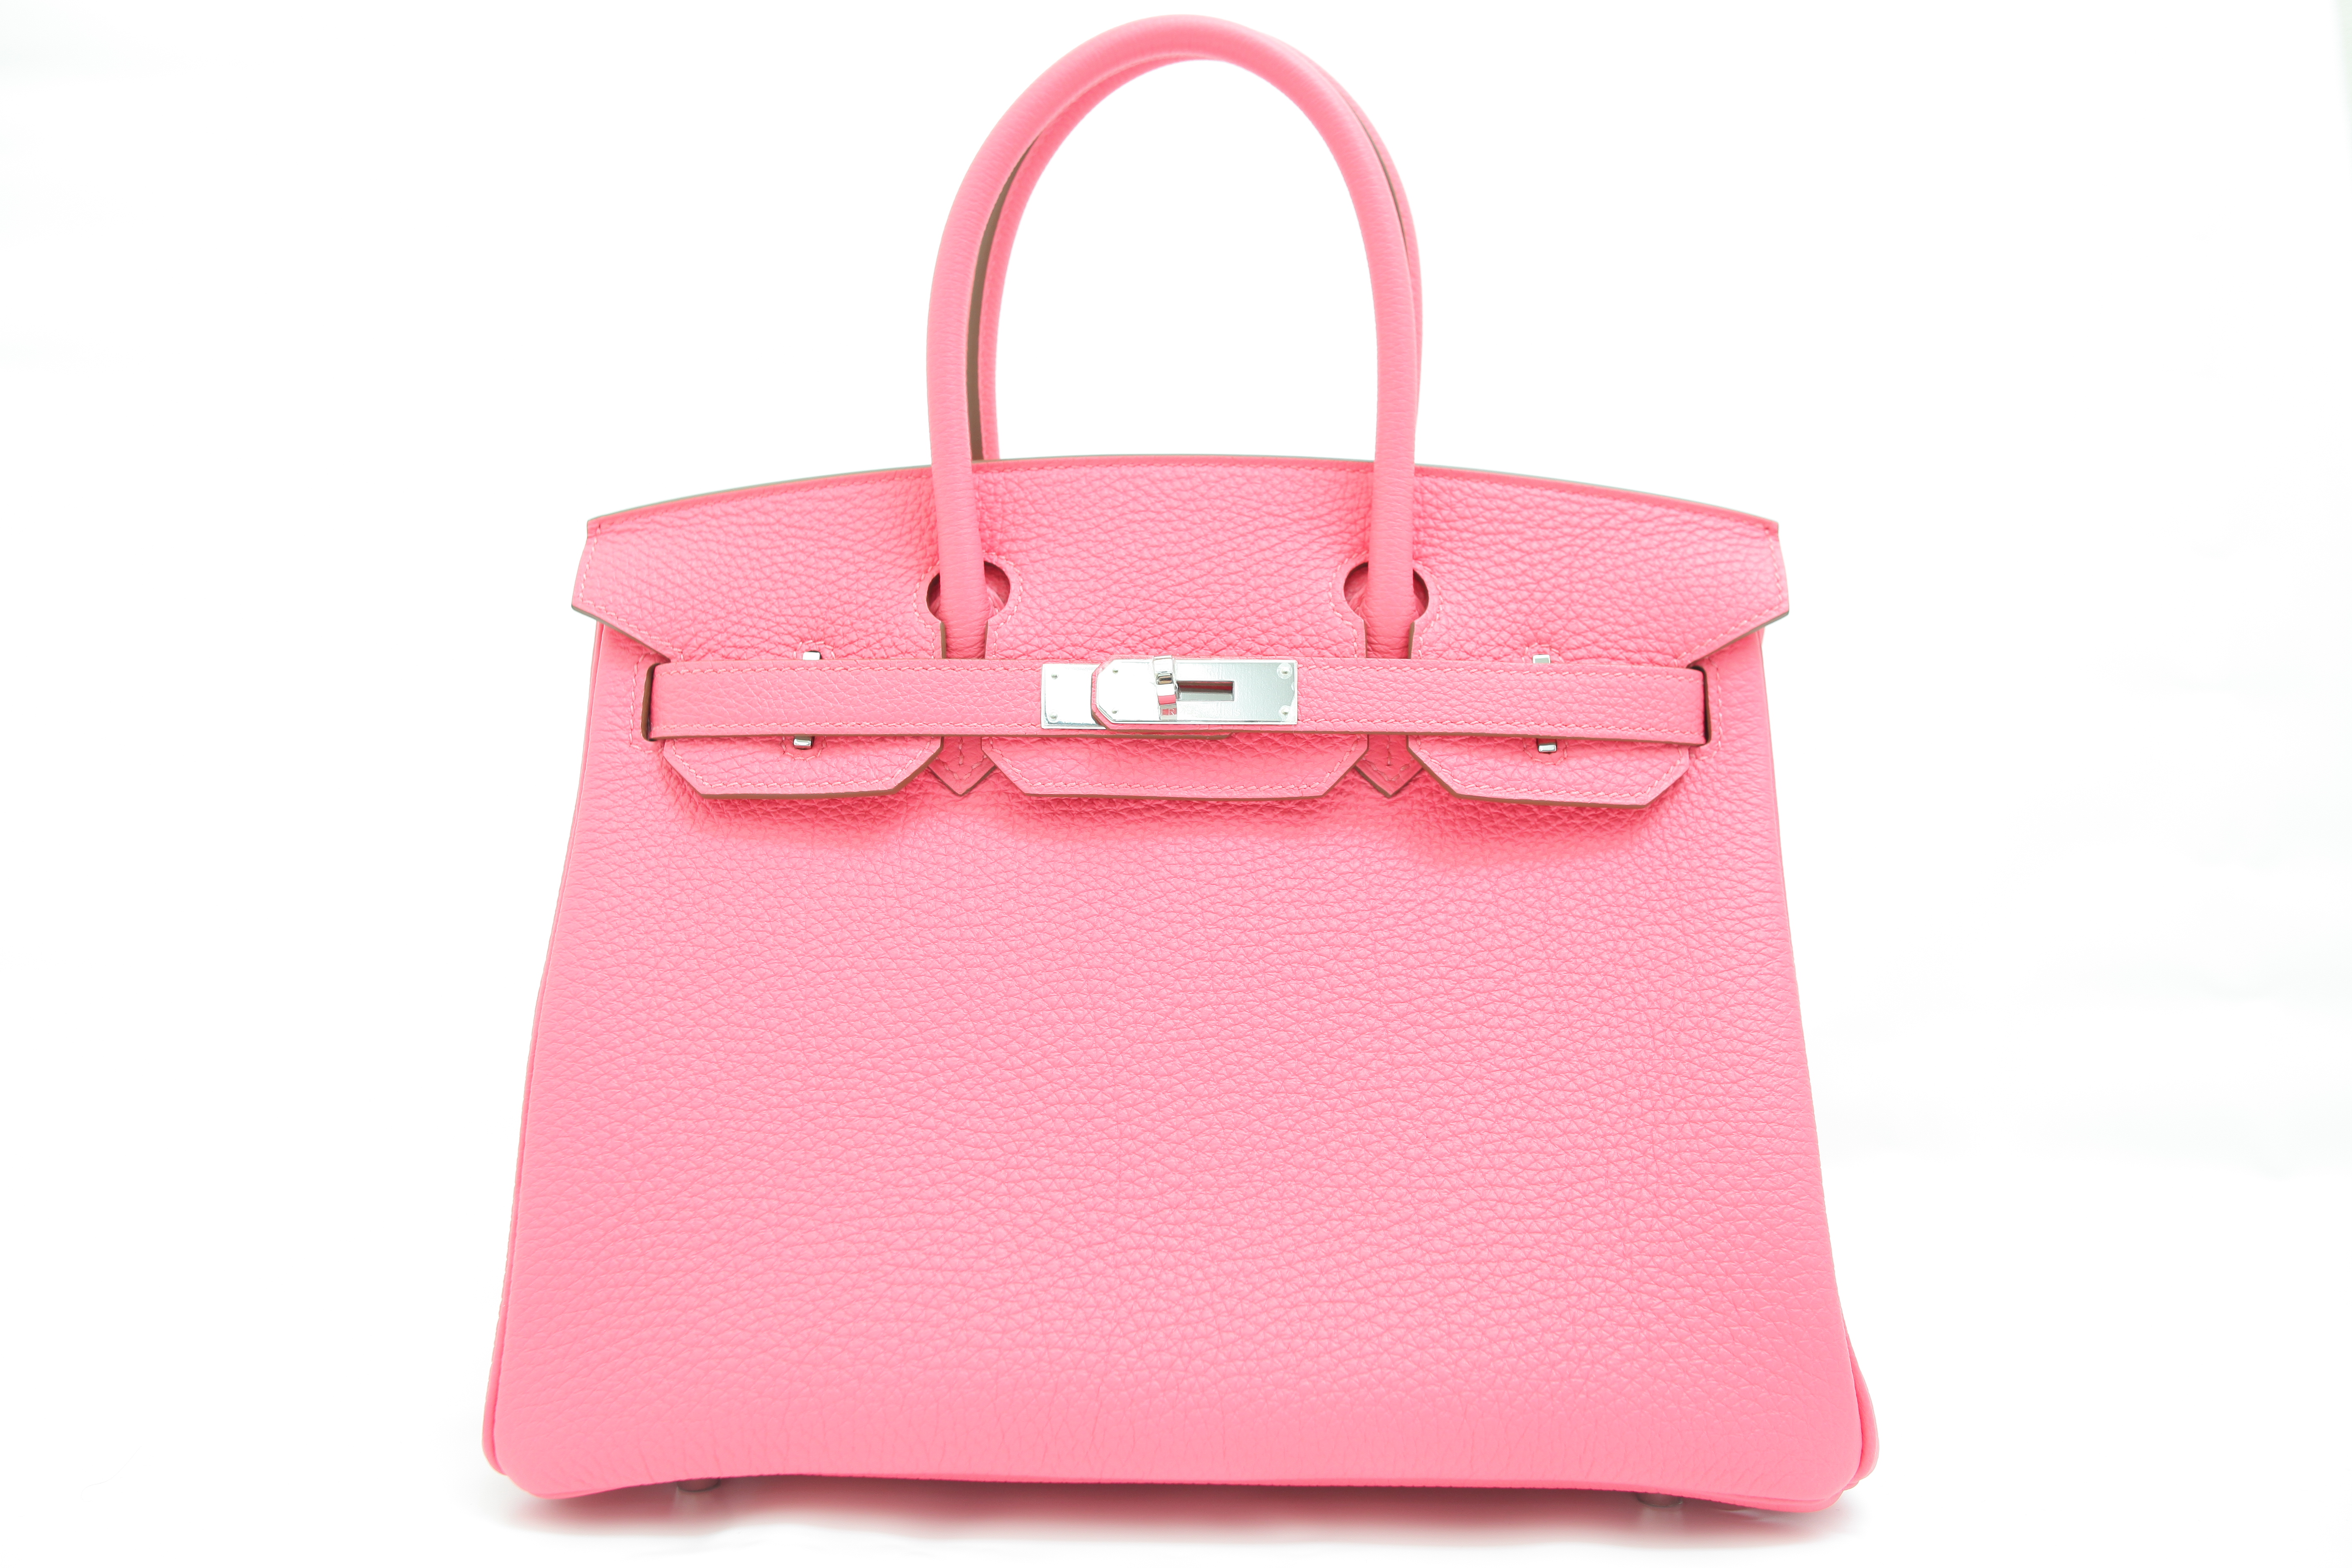 herman birkin bag cost original, hermes handbags for sale